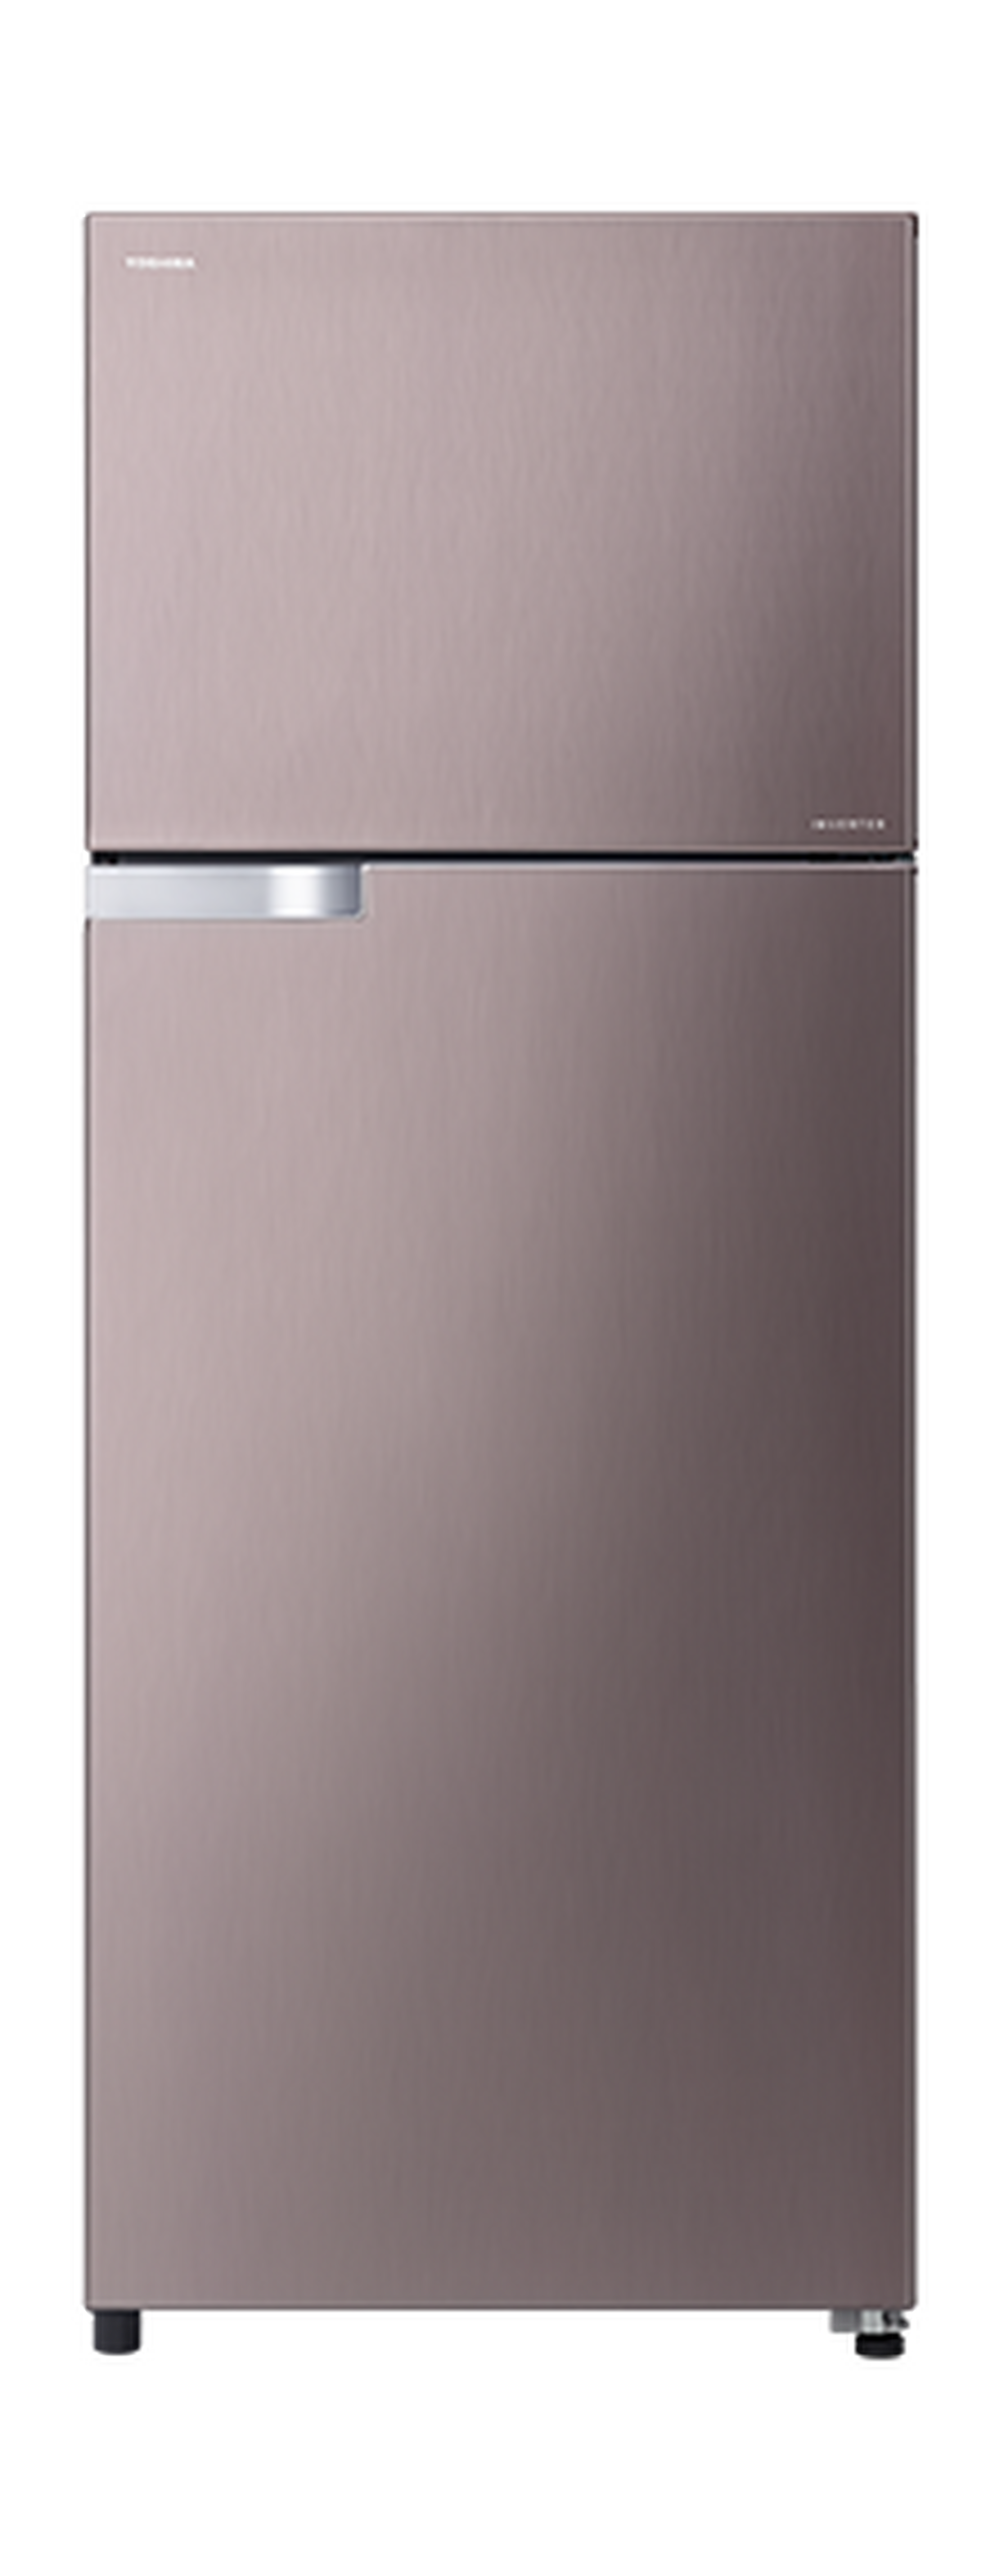 Toshiba 18 Cft. Top Freezer Refrigerator (GR-T565UBZ) – Reddish Gold